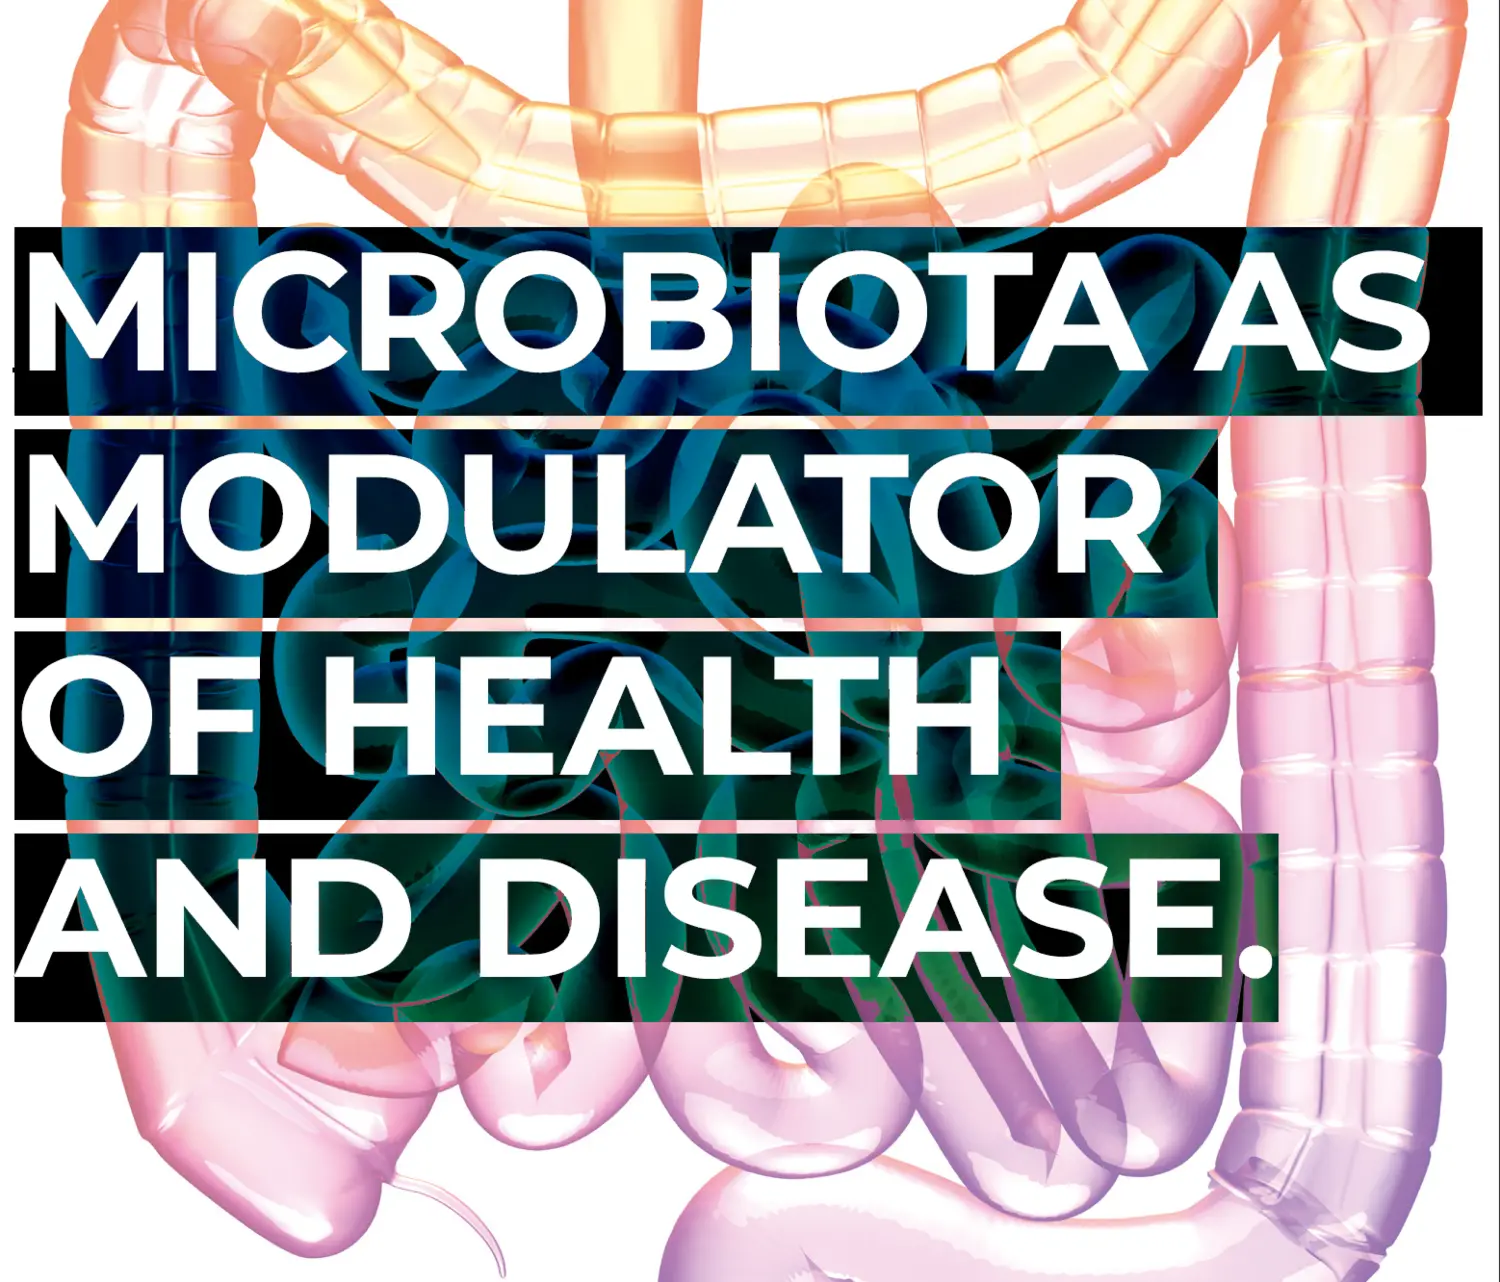 Microbiota as Modulator of Health and Disease.